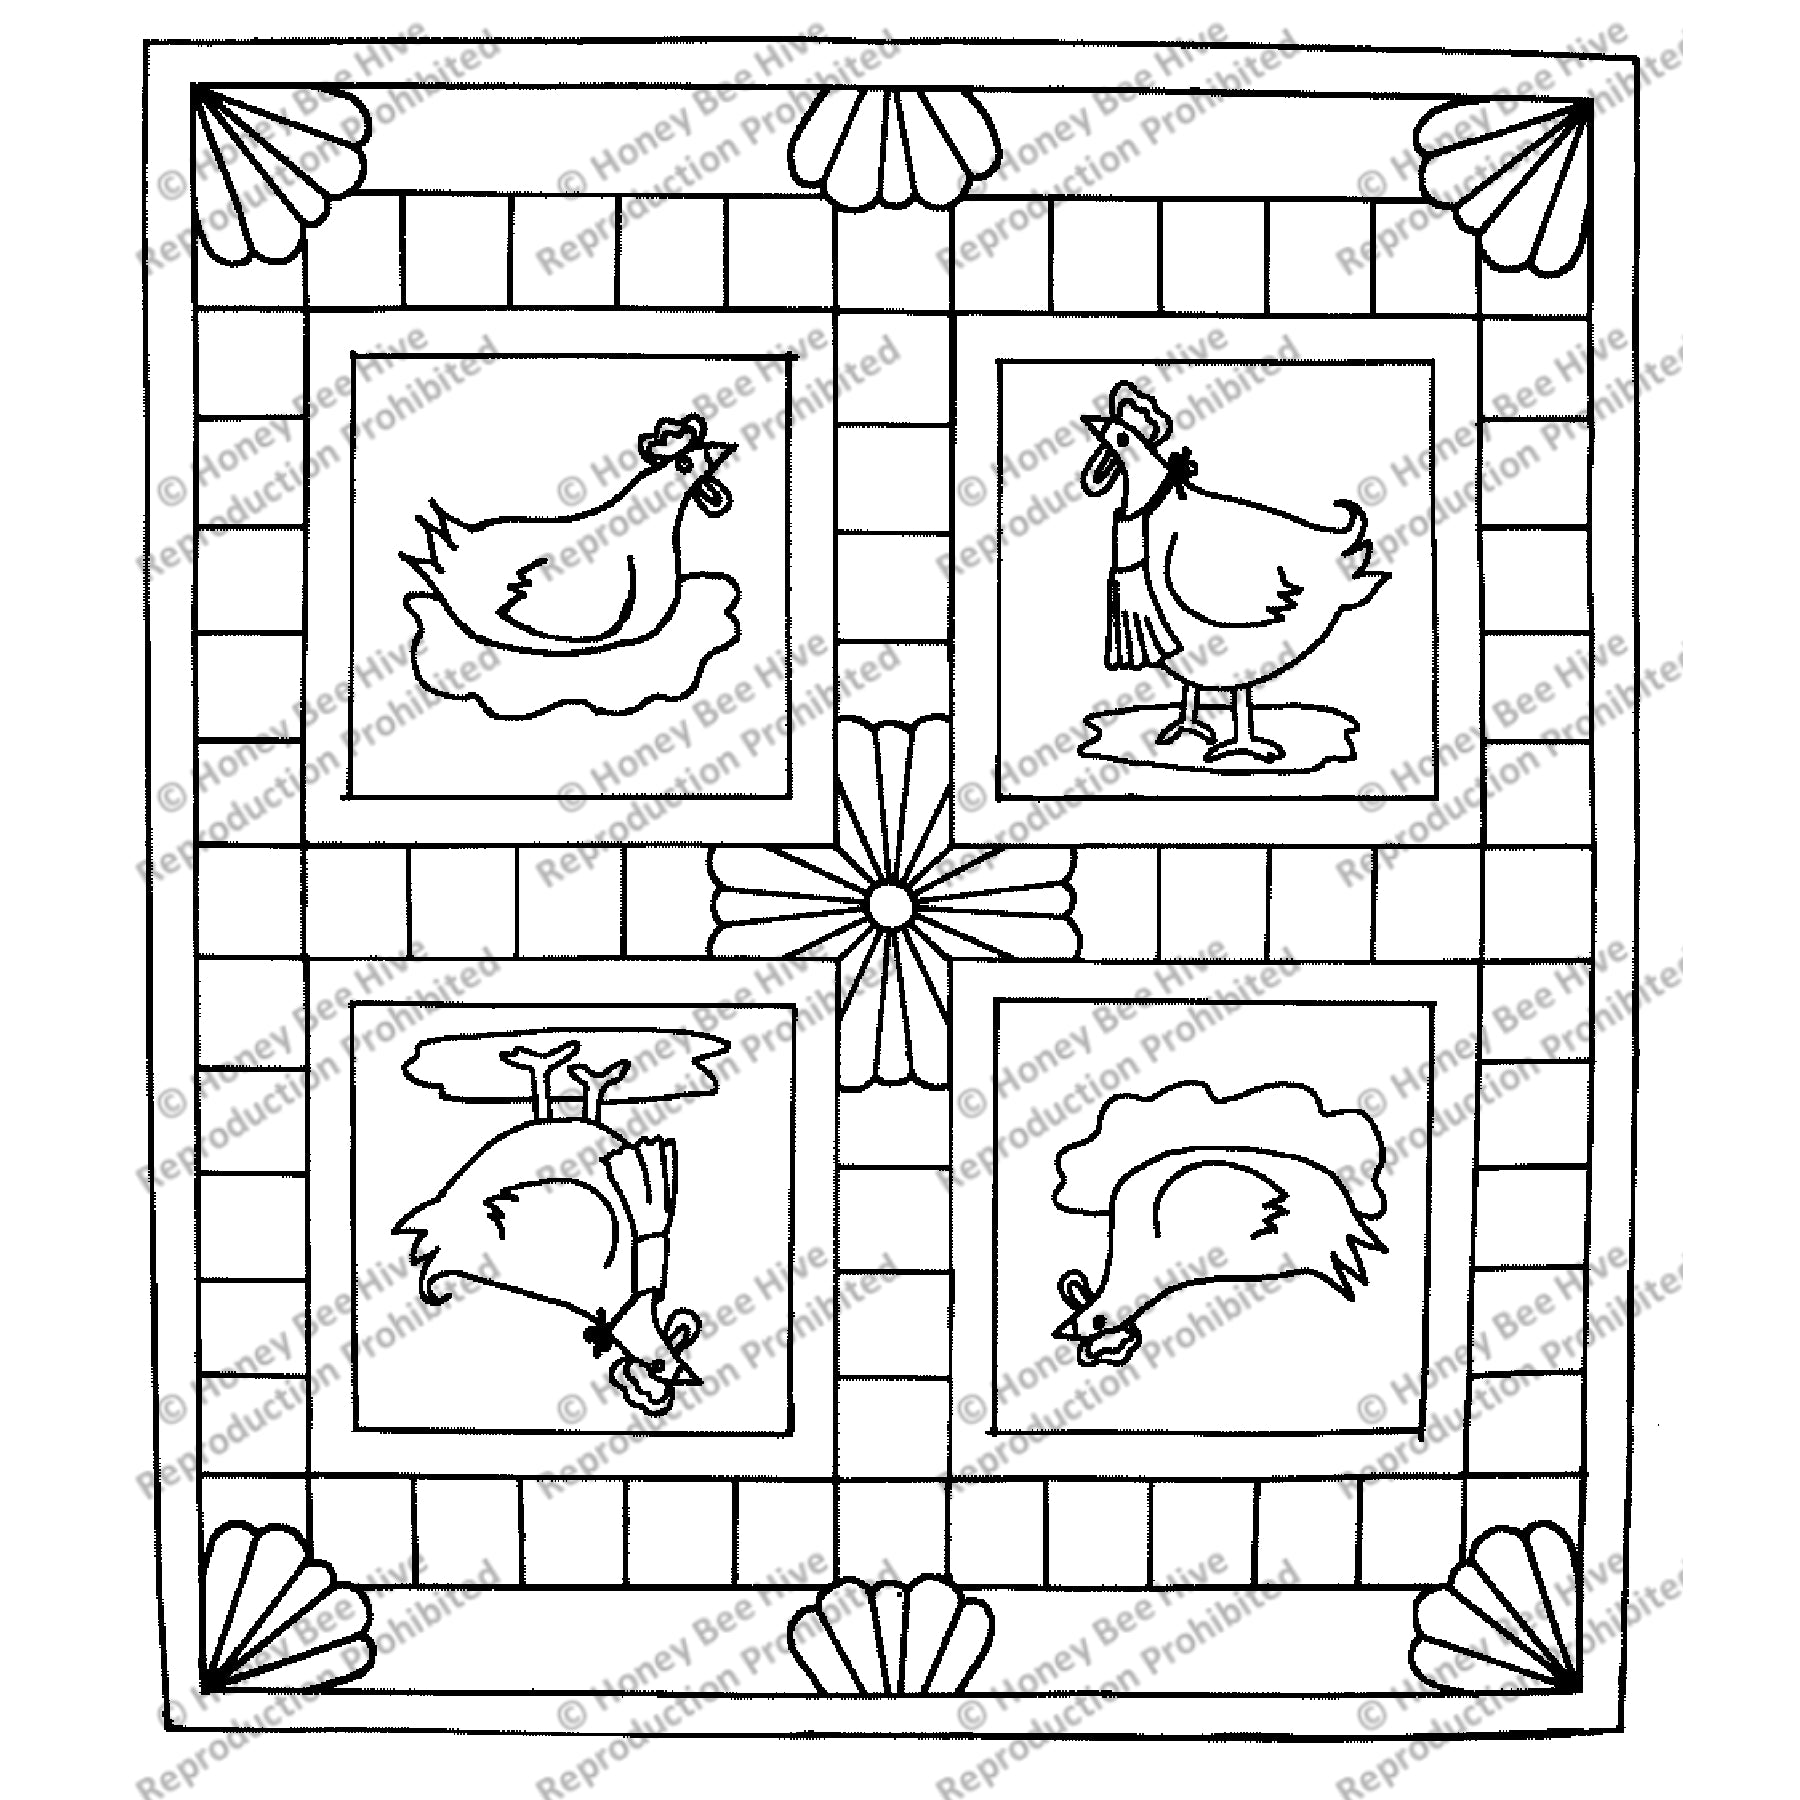 Fritz's Hen House, rug hooking pattern